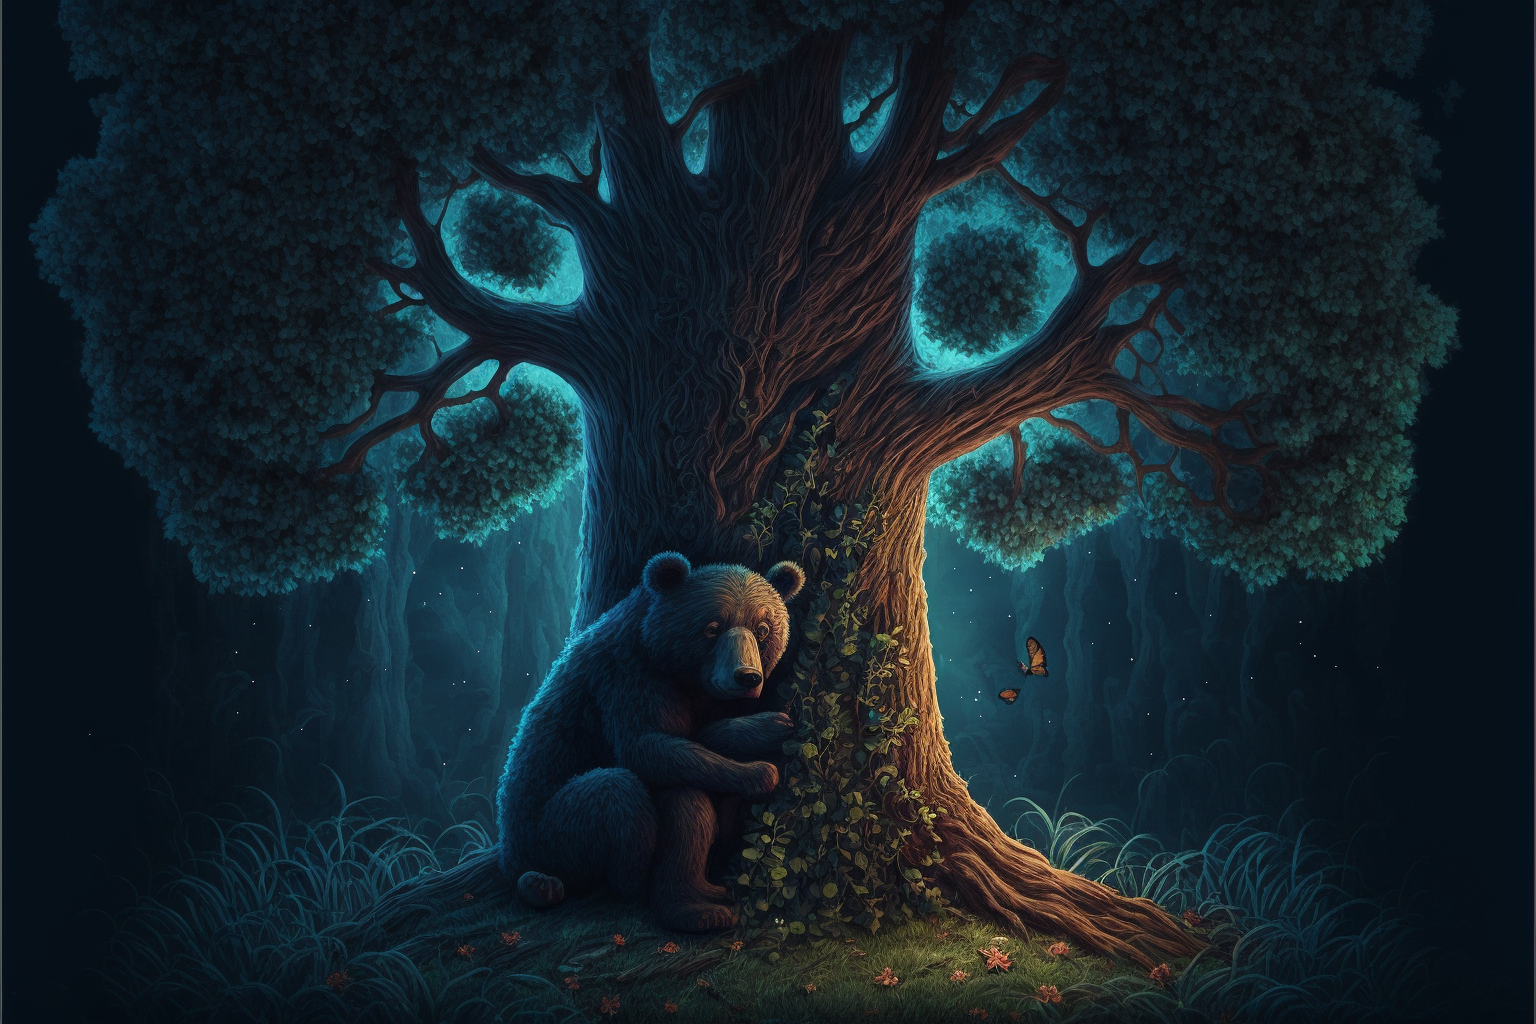 The Magic Tree of Wonders and the Sleepy bear